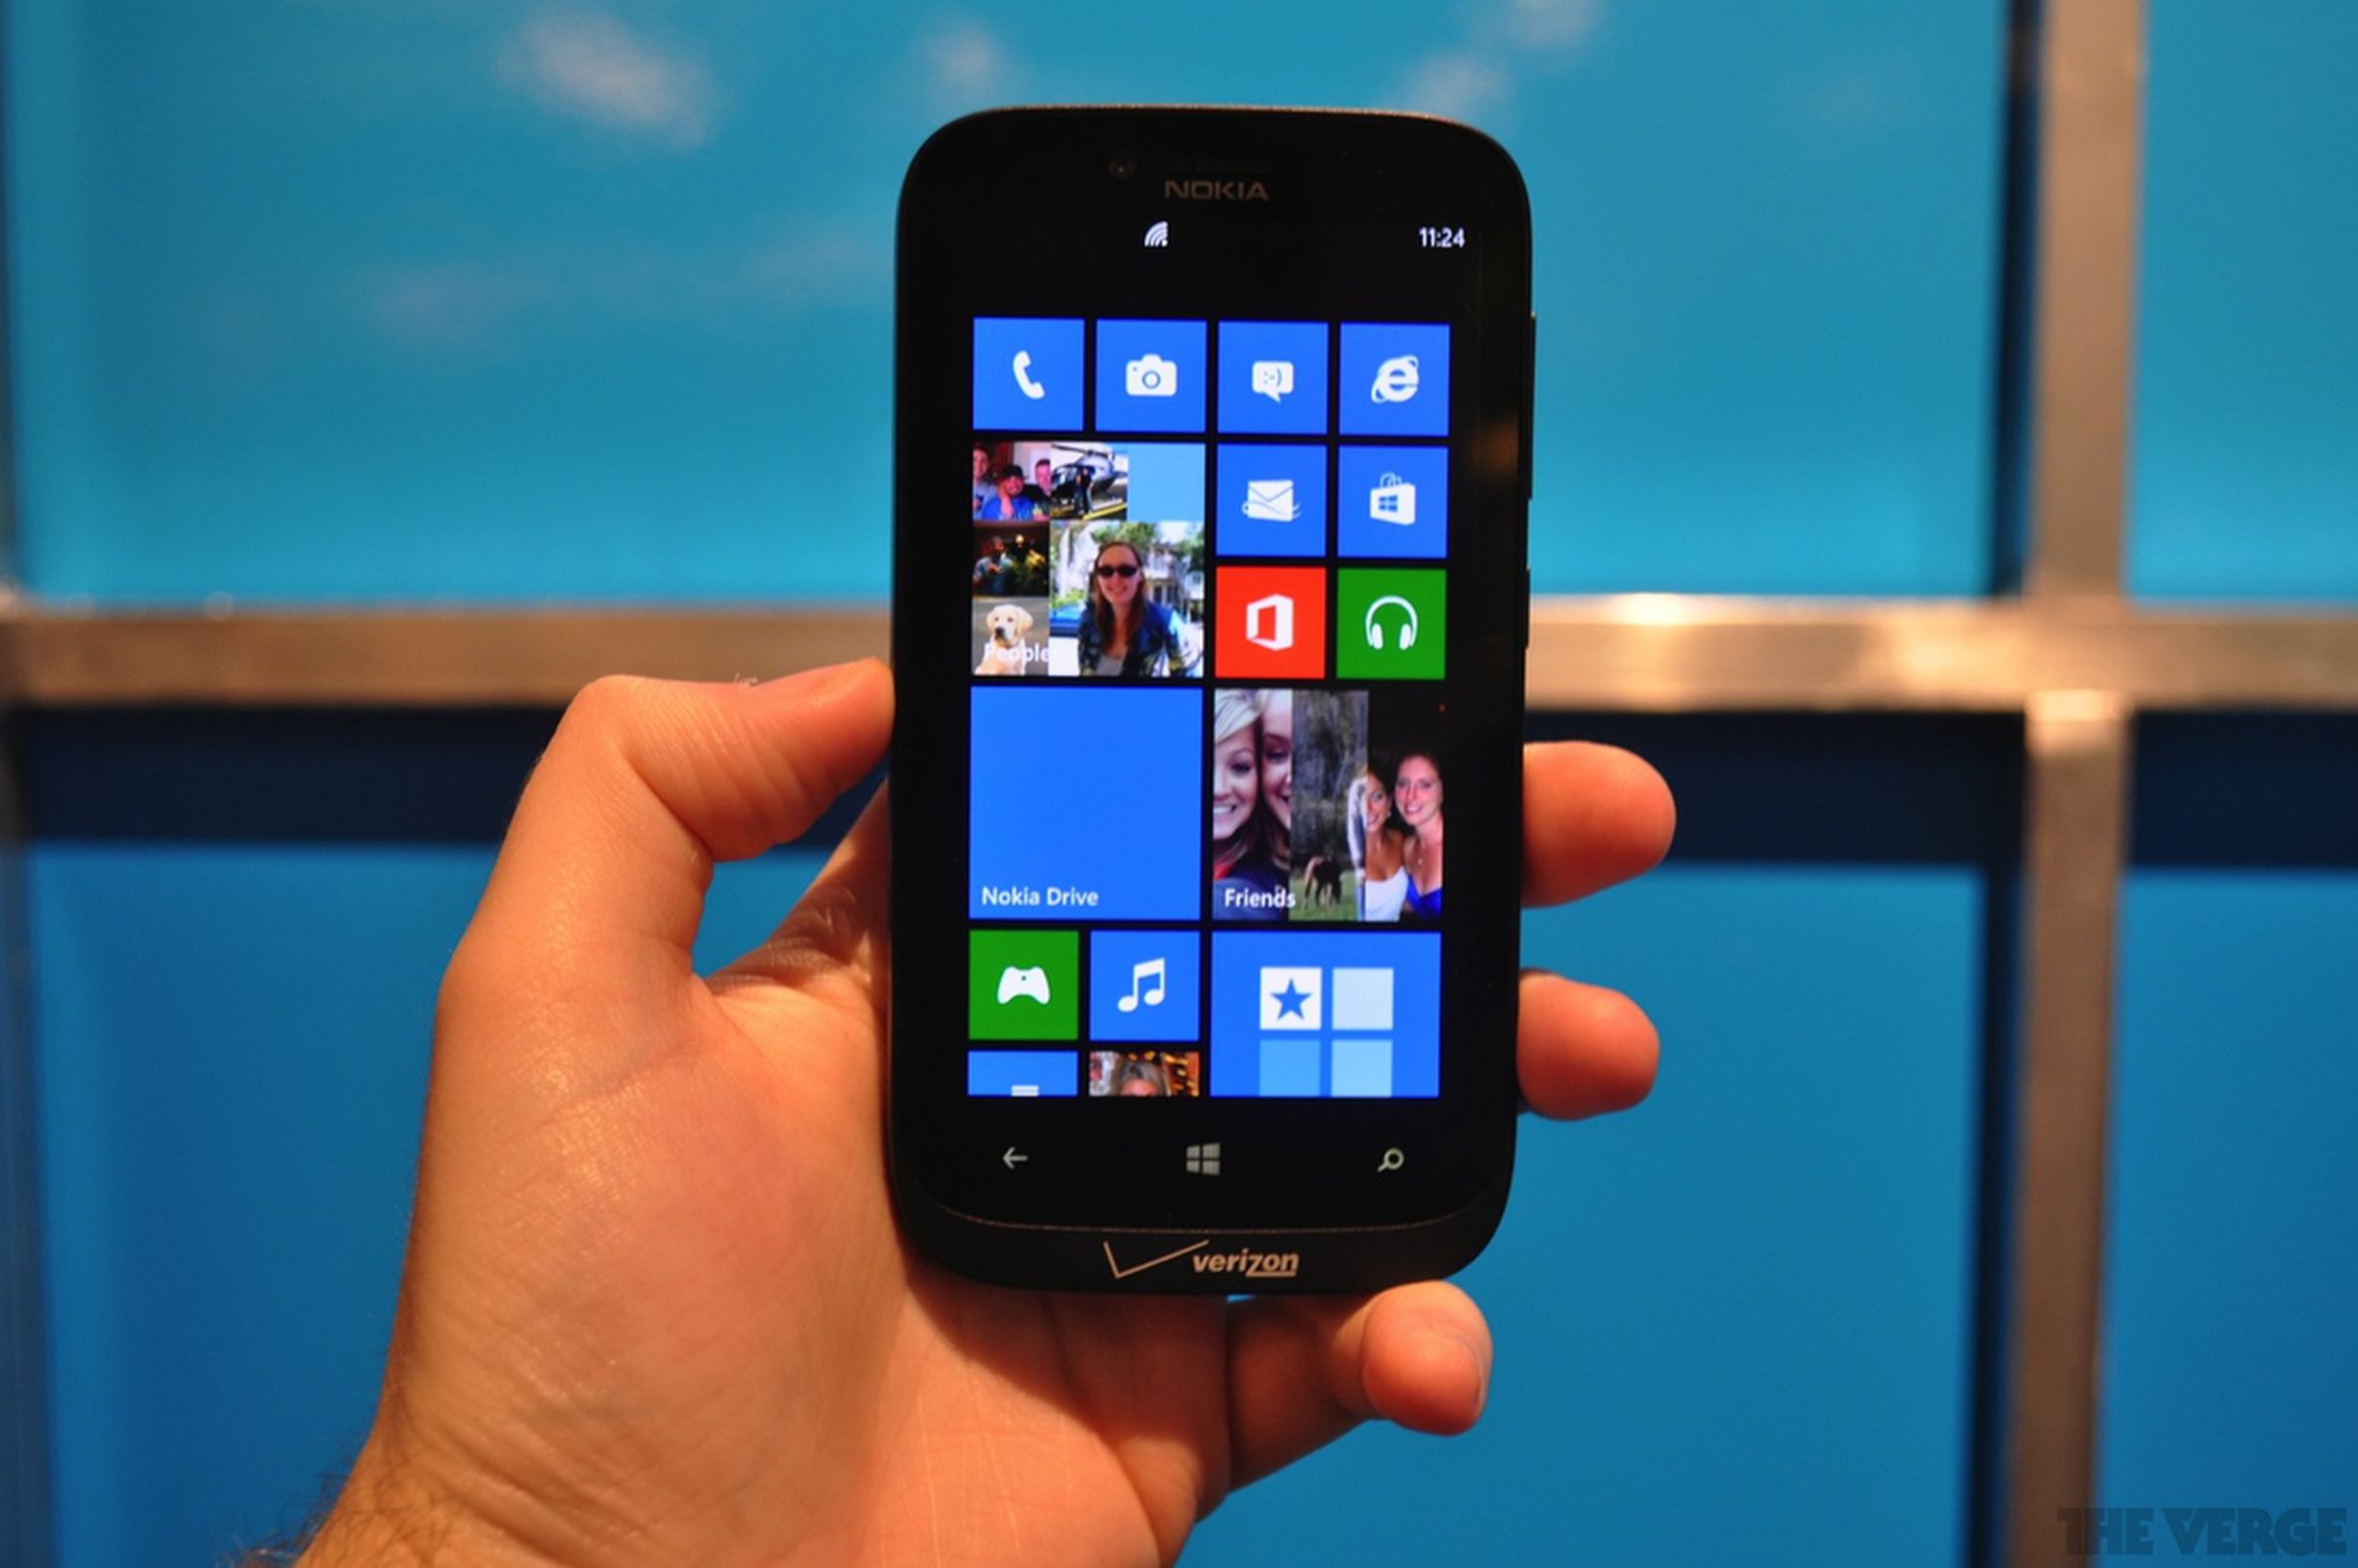 Nokia Lumia 822 pictures